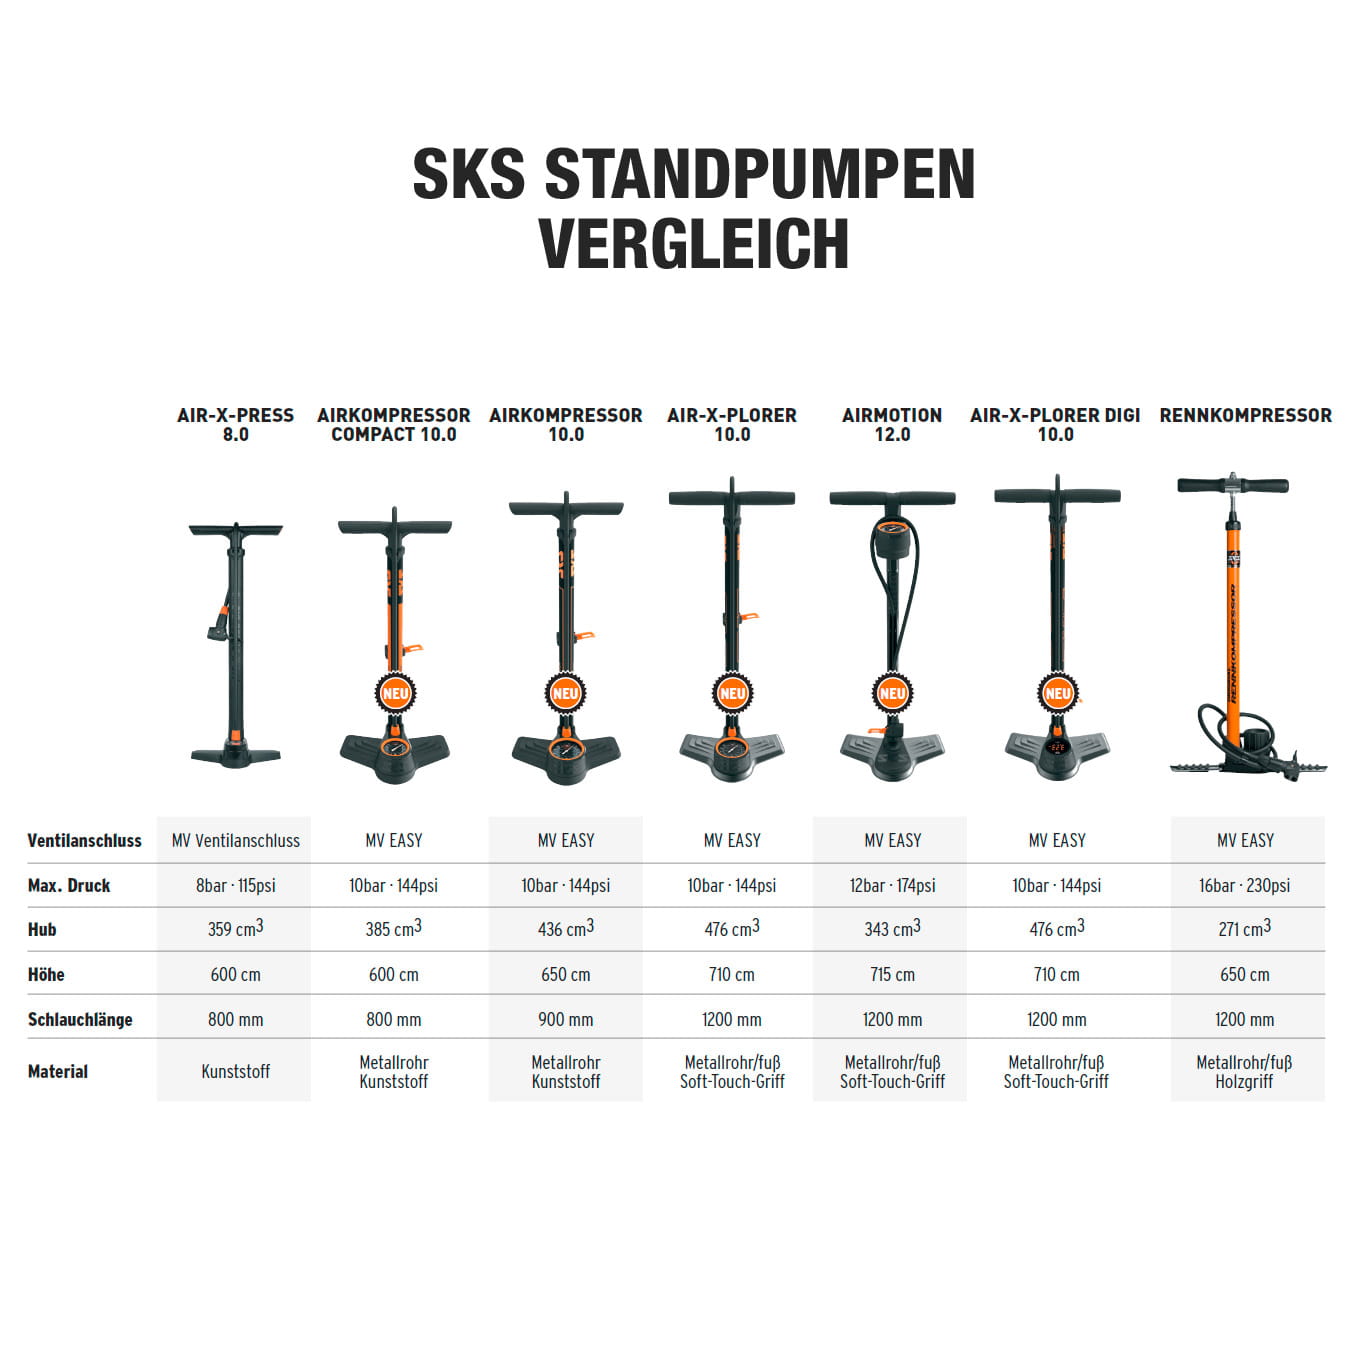 SKS Air-X-plorer 10.0 Standpumpe